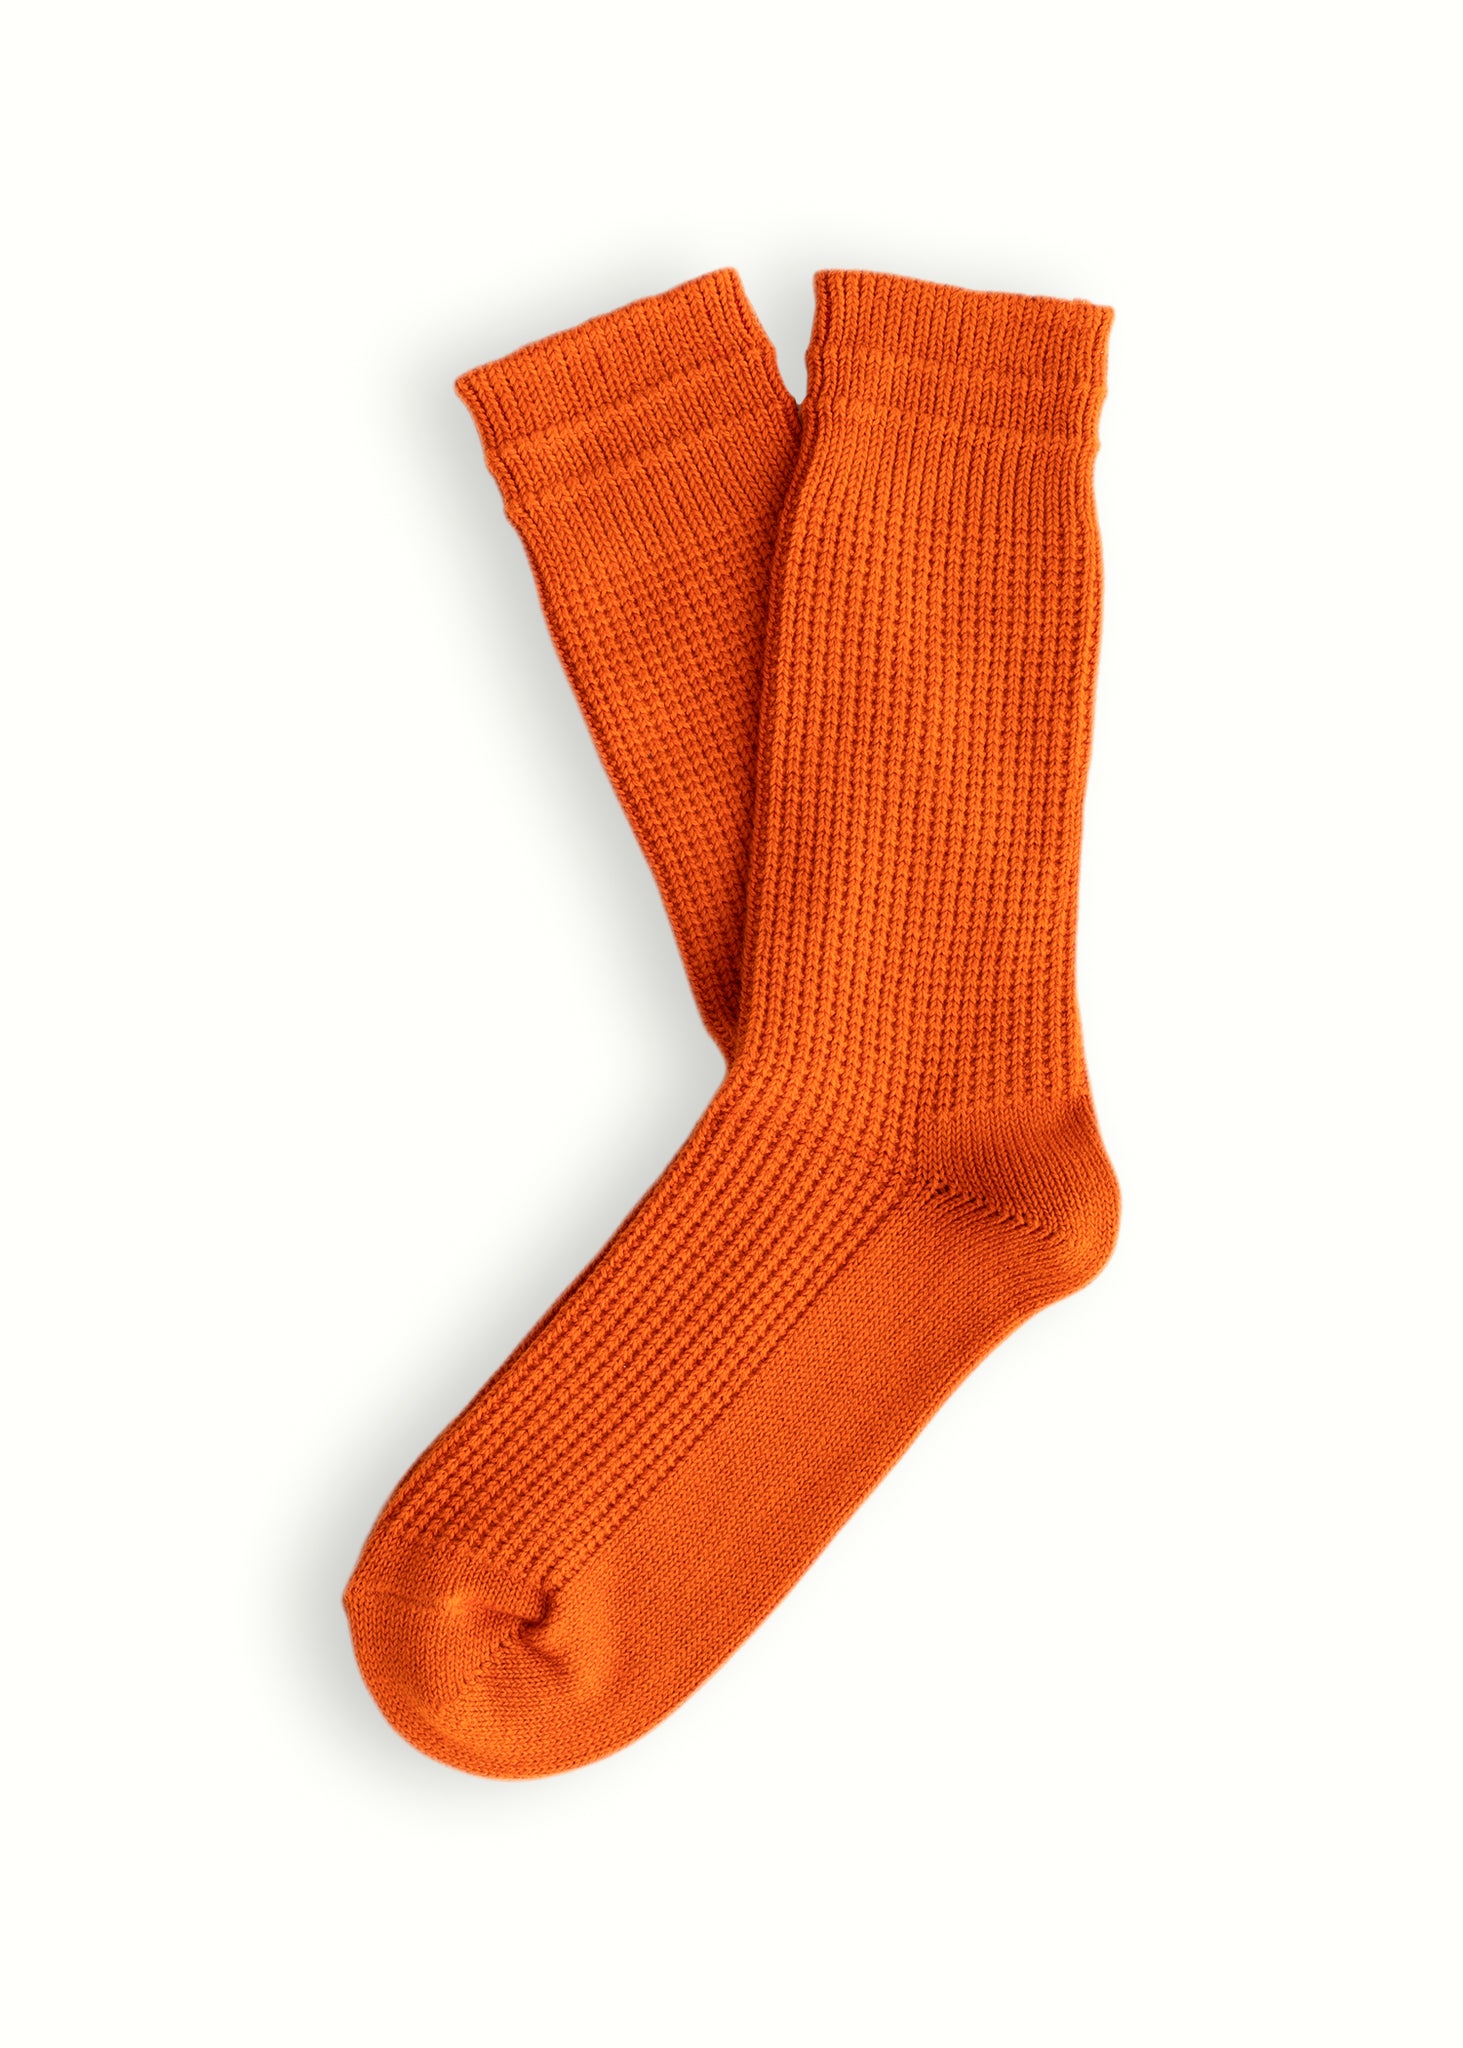 Thunders Love Link Orange Socks